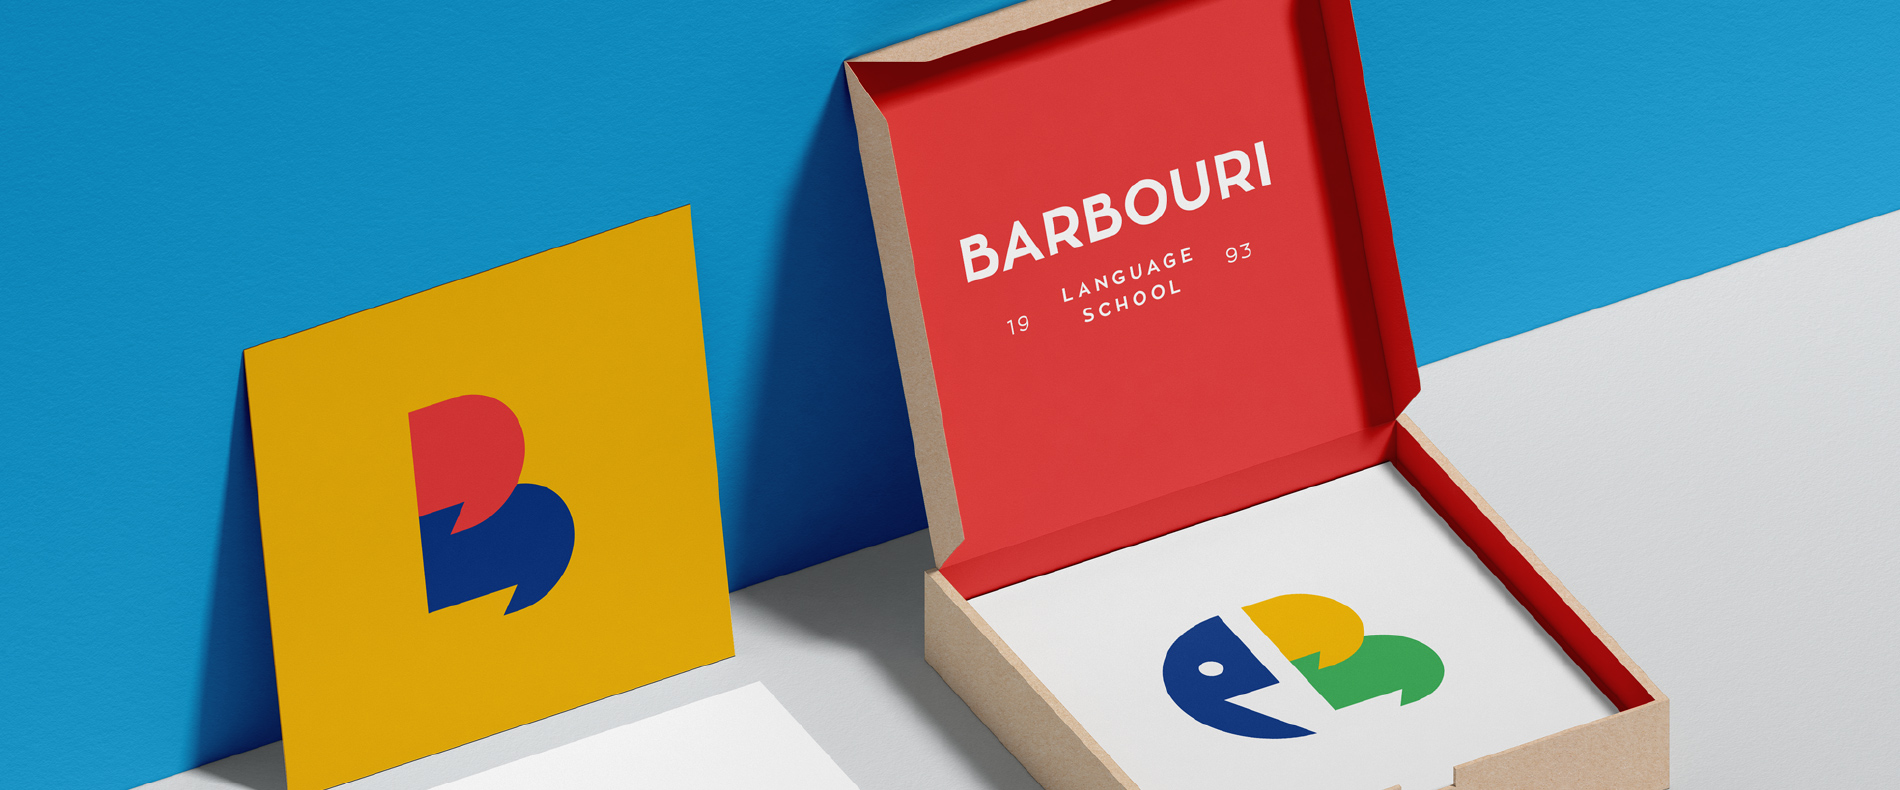 Barbouri, DESIGN & IDENTITY